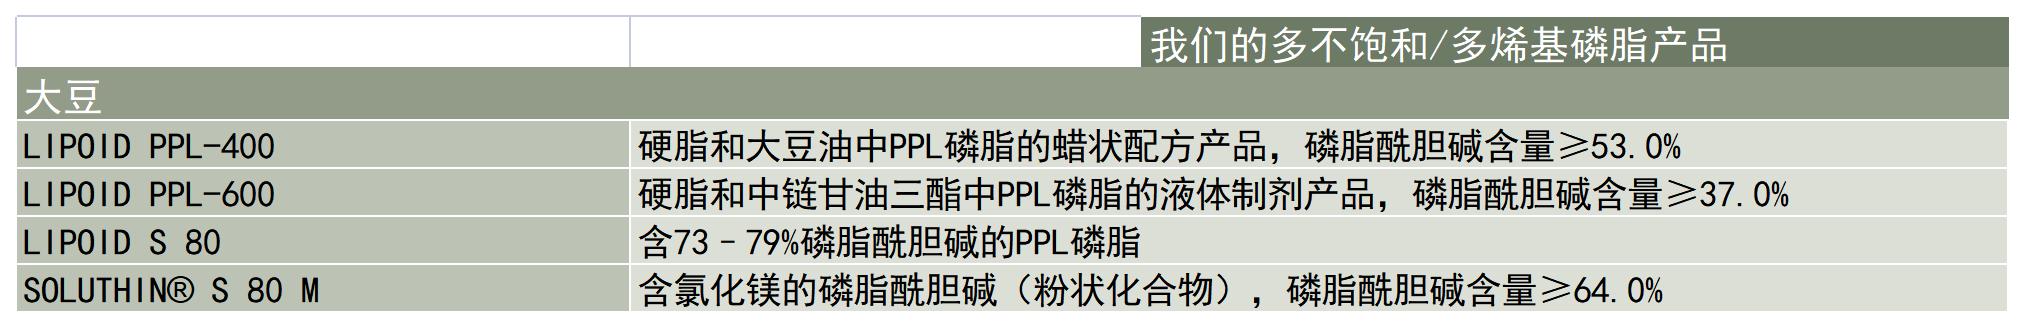 Lipoid-产品-磷脂系统-多不饱和多烯基磷脂PPL-产品列表_A1C6.jpg